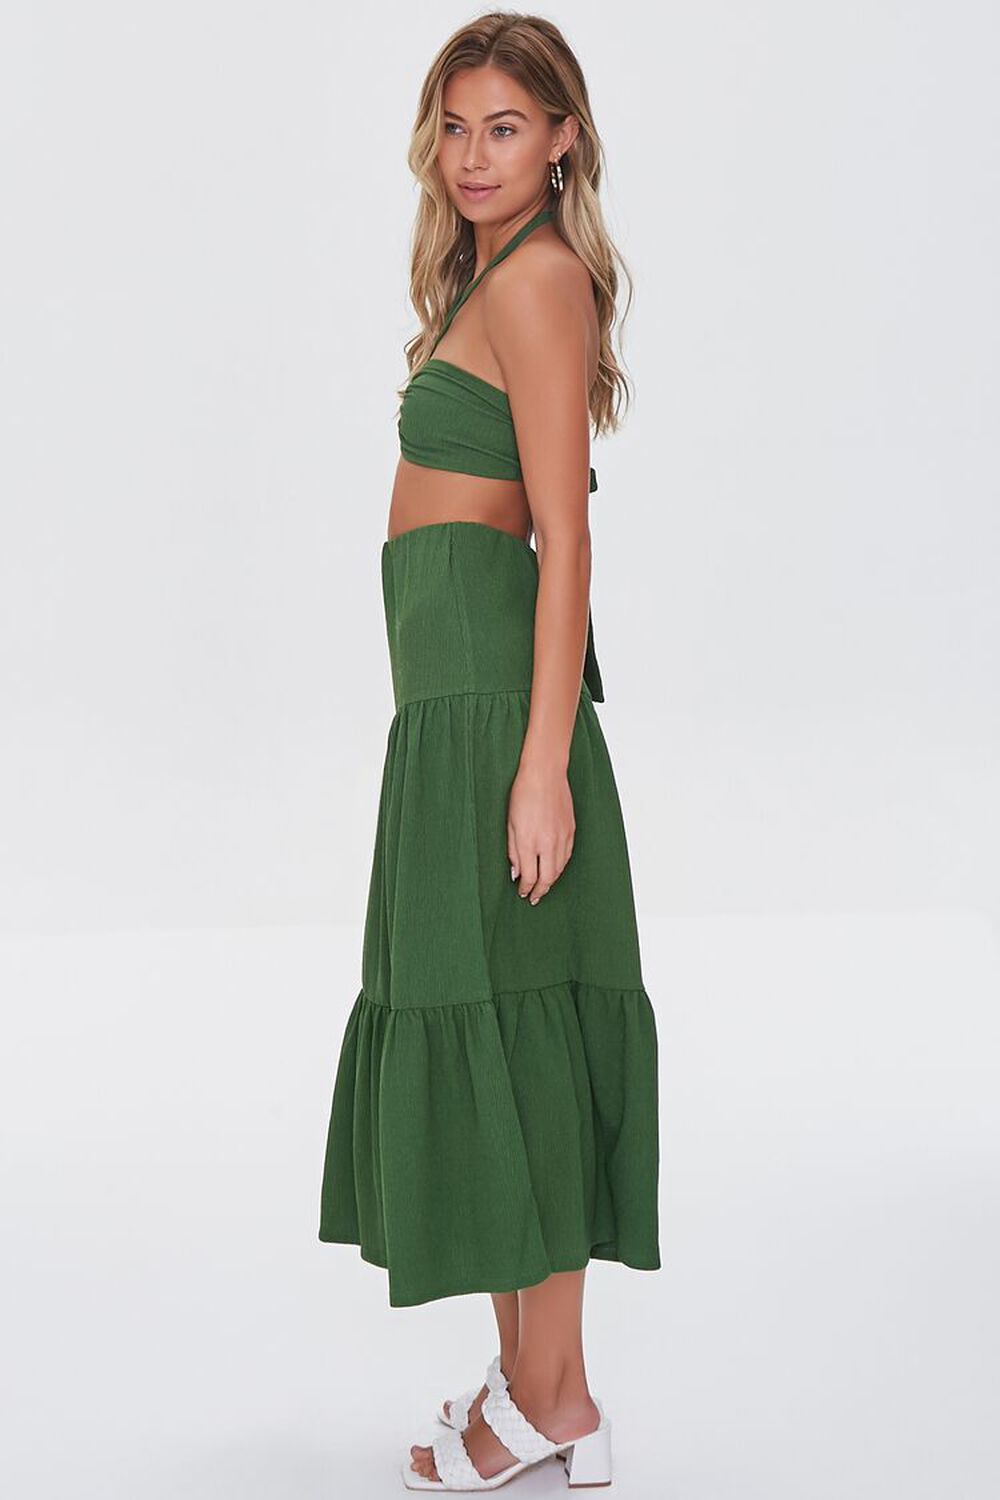 GREEN Crop Top & Tiered Midi Skirt Set, image 2